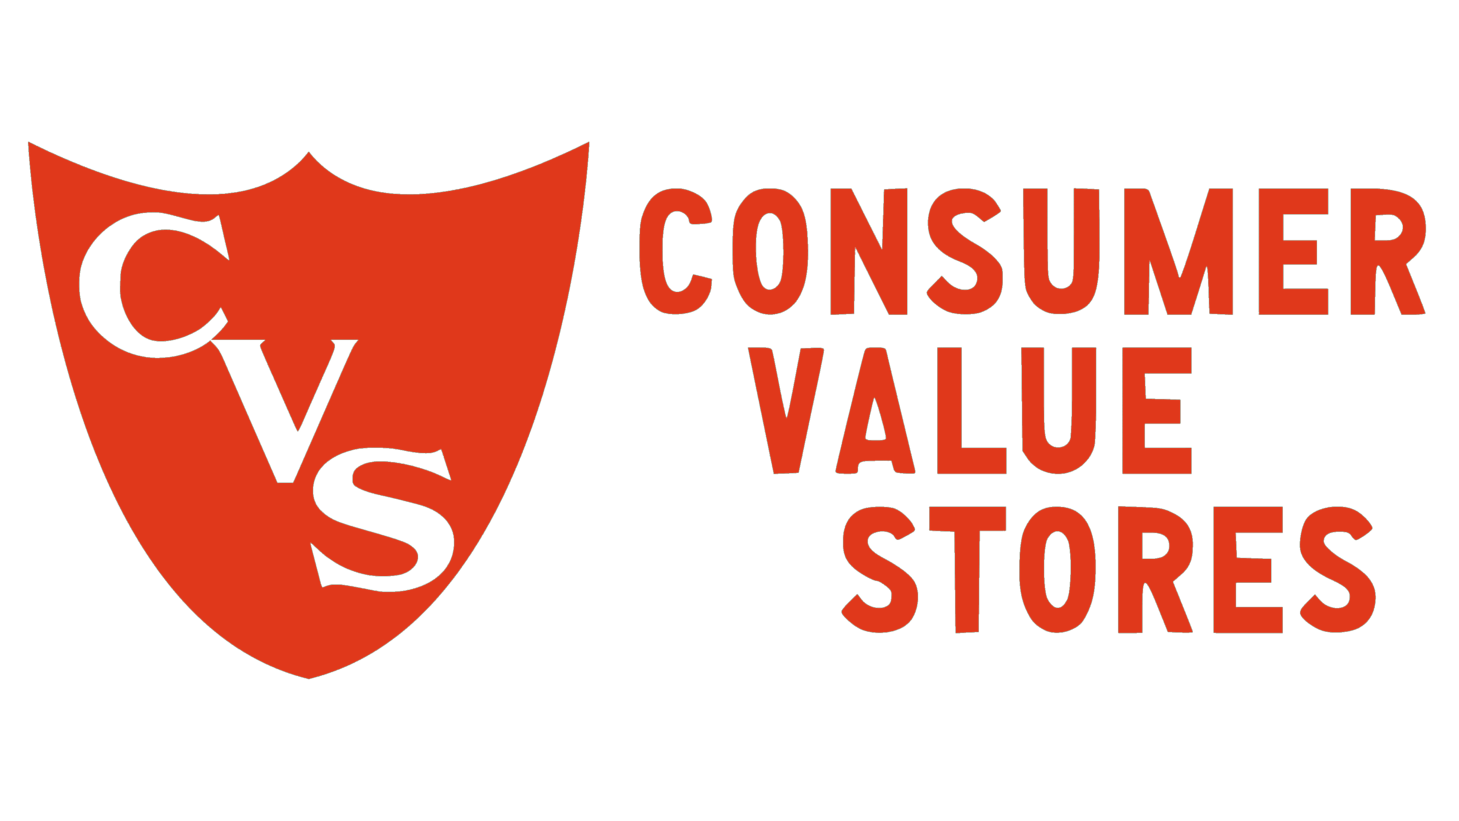 Consumer value stores sign 1963 1969